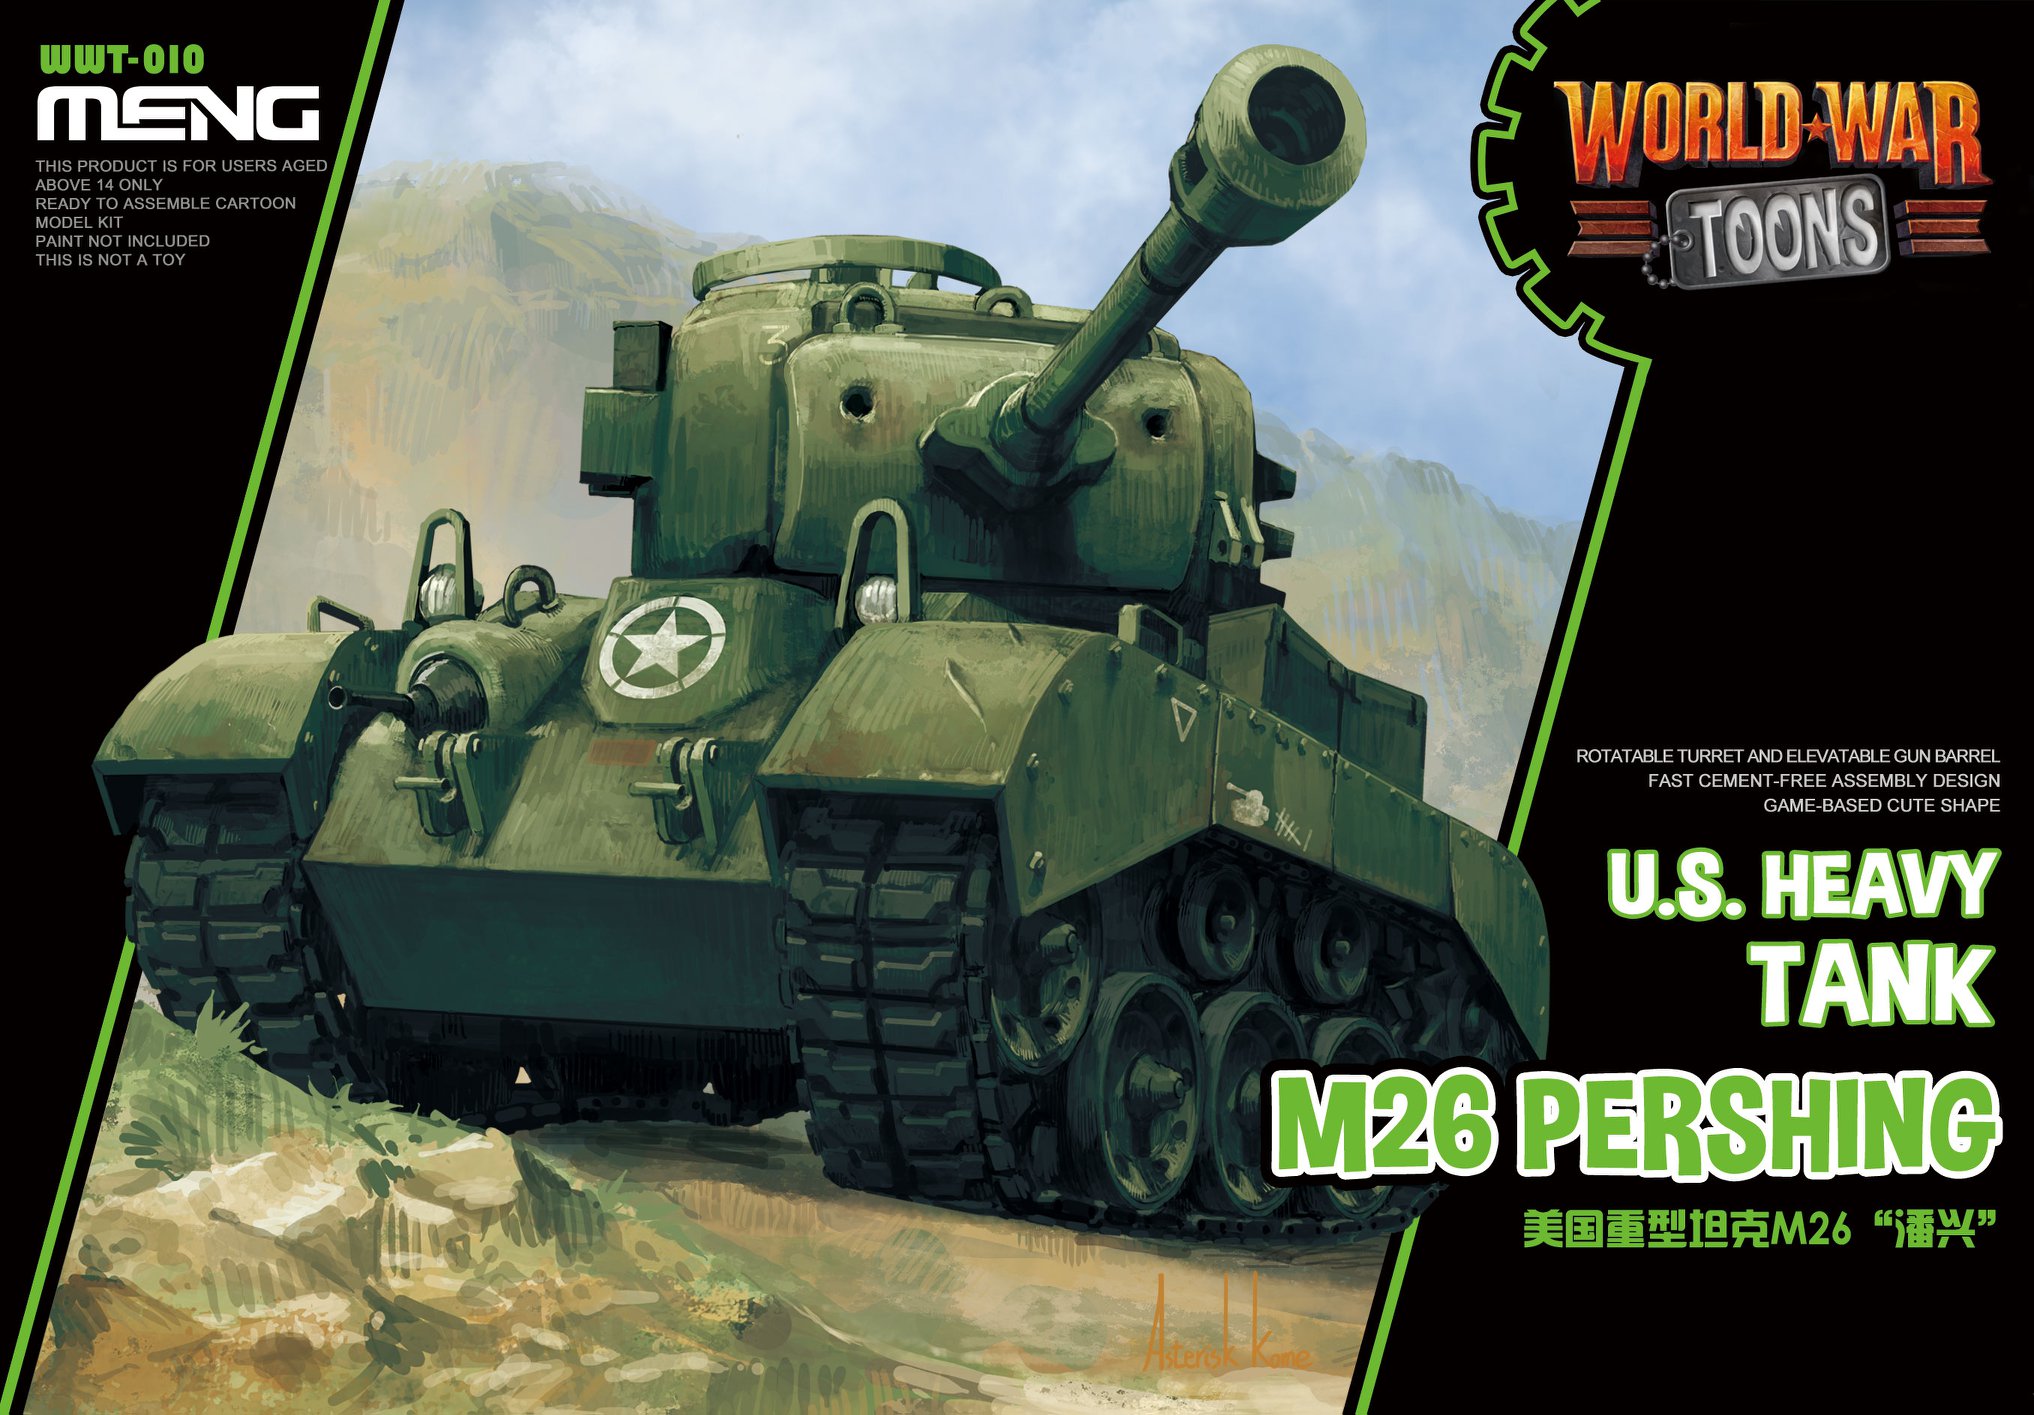 U.S. Heavy Tank M26 Pershing (Cartoon model)